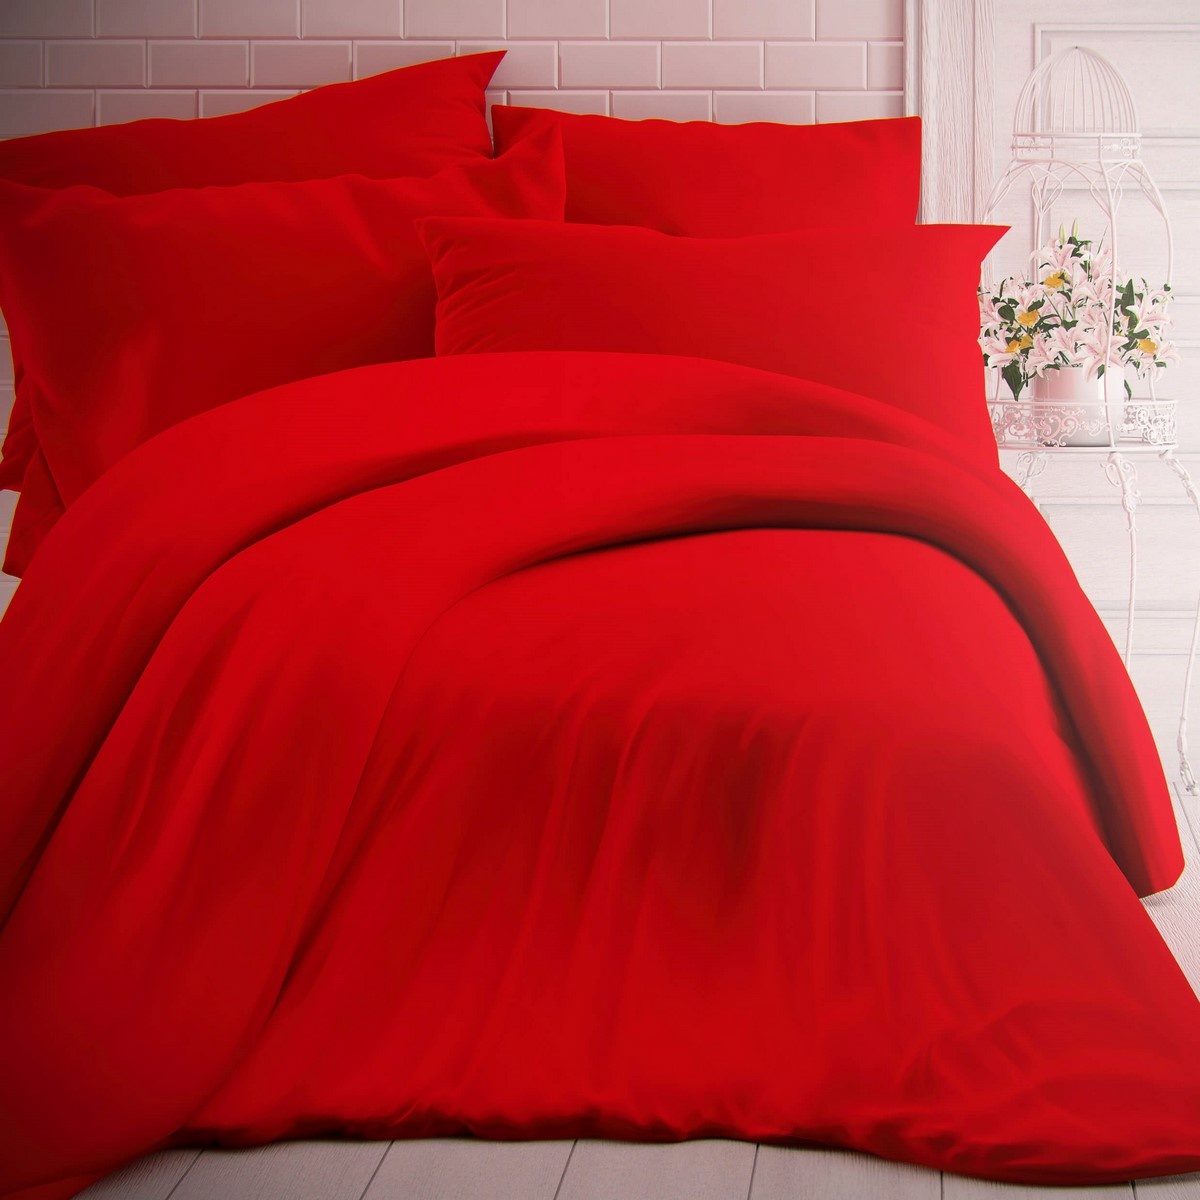 Kvalitex Lenjerie de pat din bumbac roșie, 200 x 200 cm, 2 buc. 70 x 90 cm, roșu, 200 x 200 cm, 2 buc. 70 x 90 cm